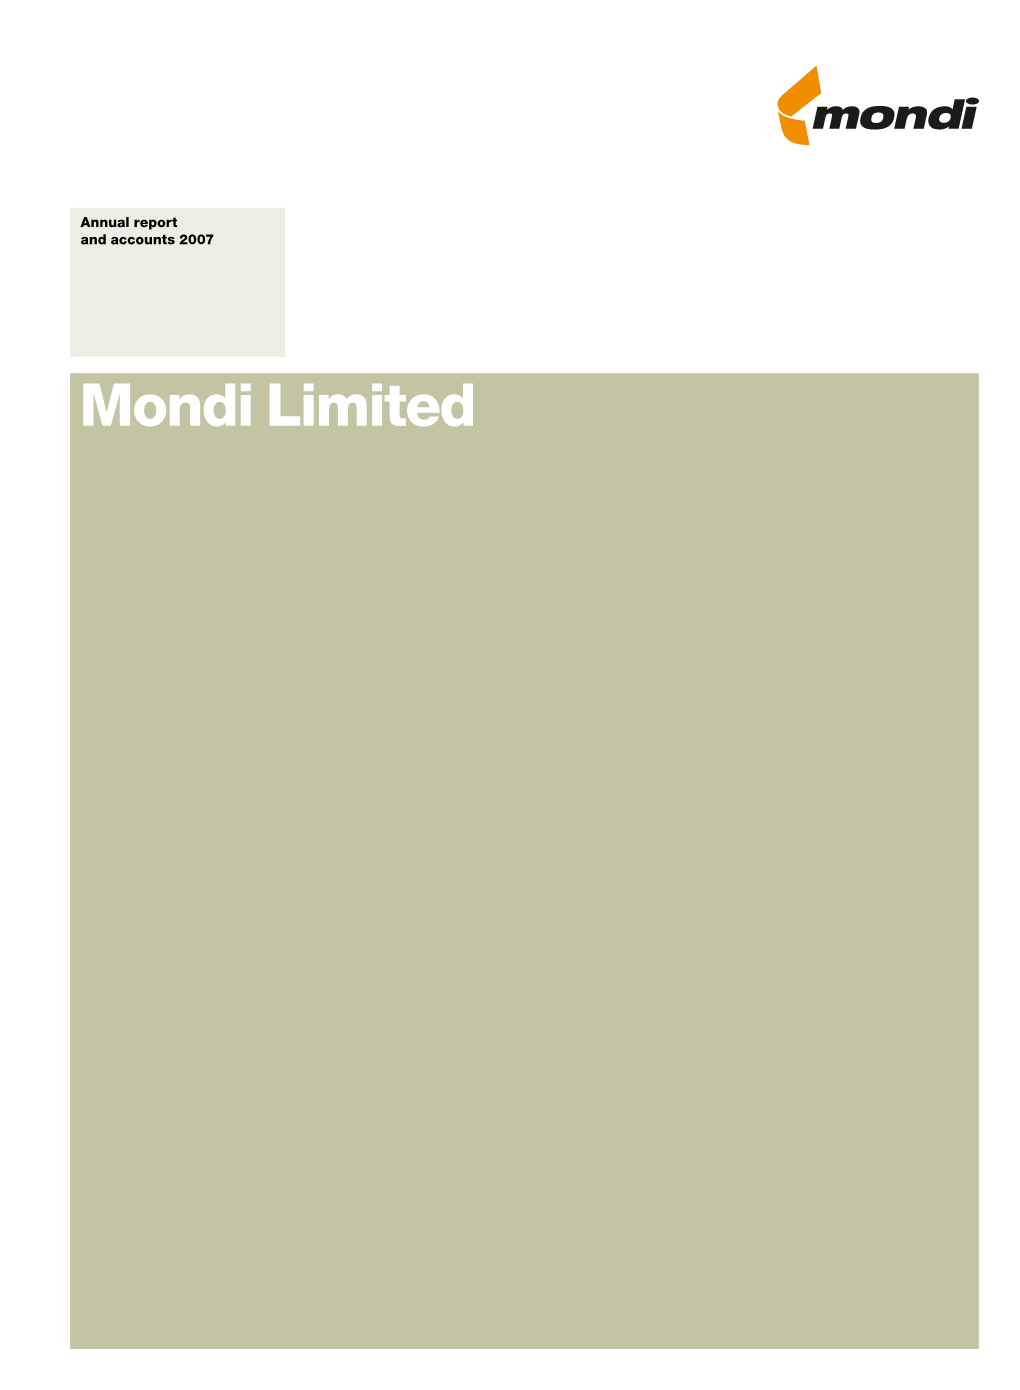 Mondi Limited Contents